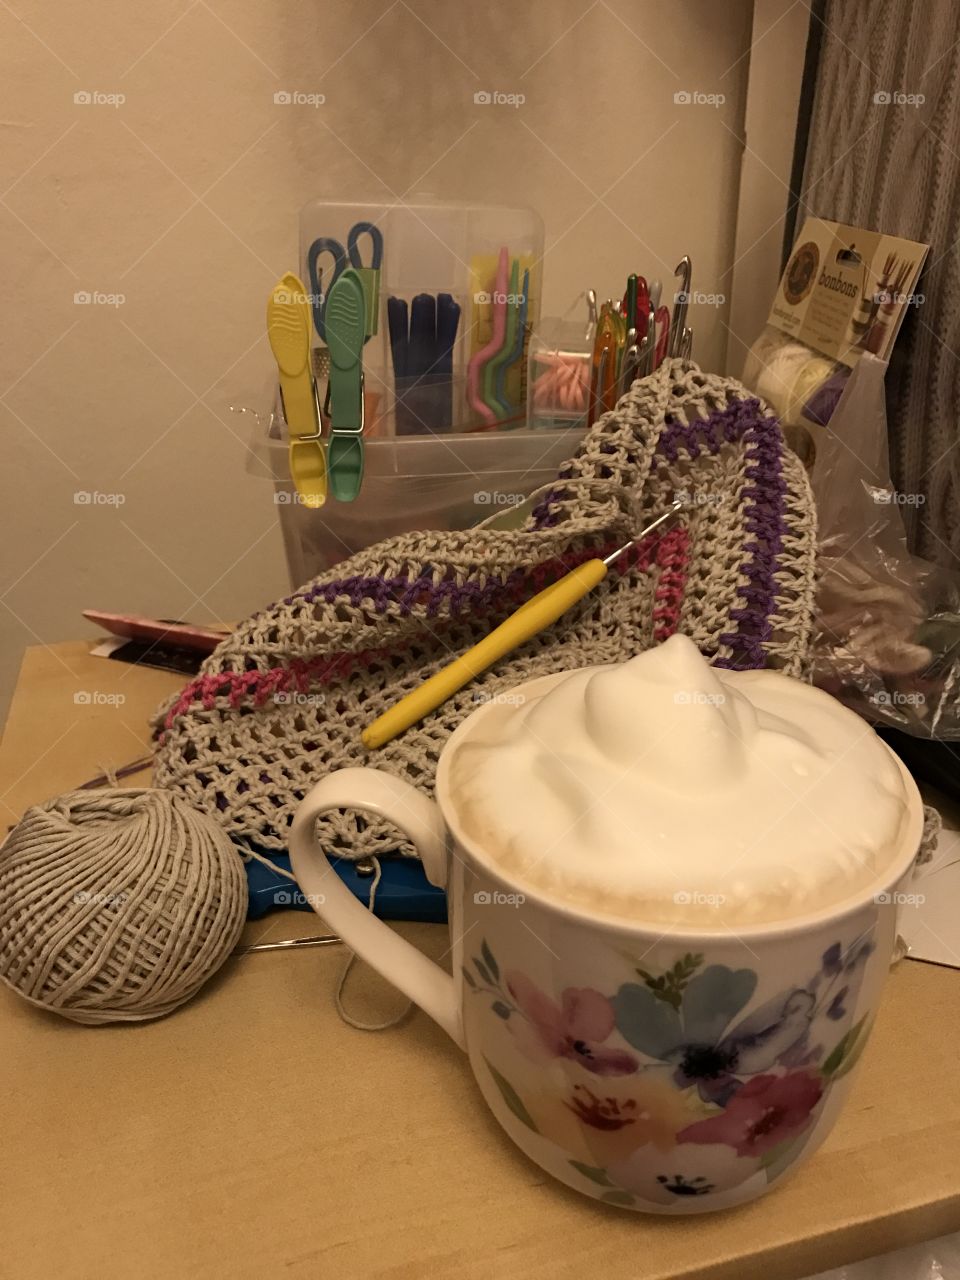 Coffee and crochet